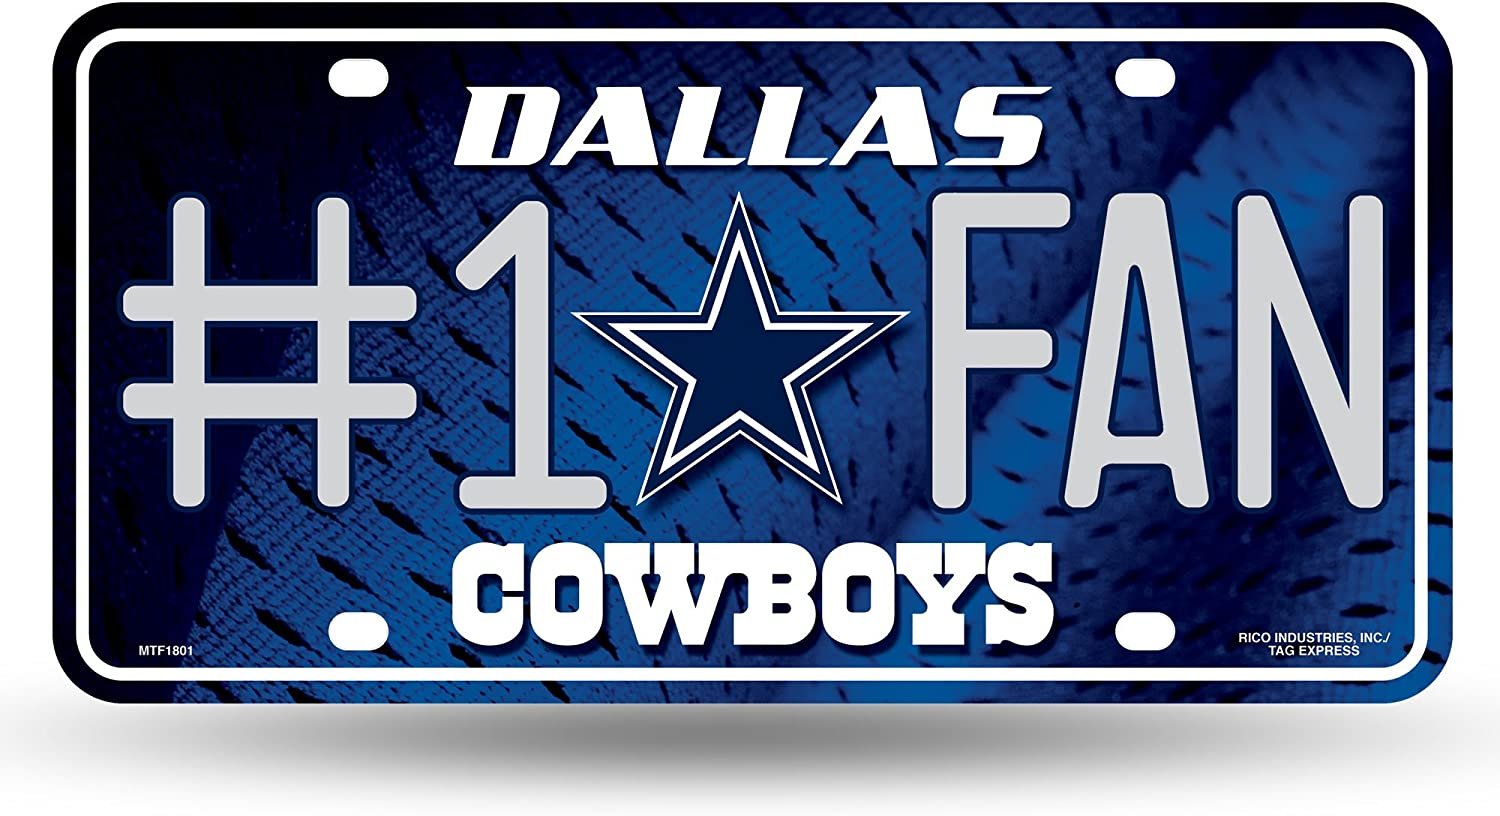 Dallas Cowboys #1 Fan Metal License Plate Tag Aluminum Novelty 12x6 Inch